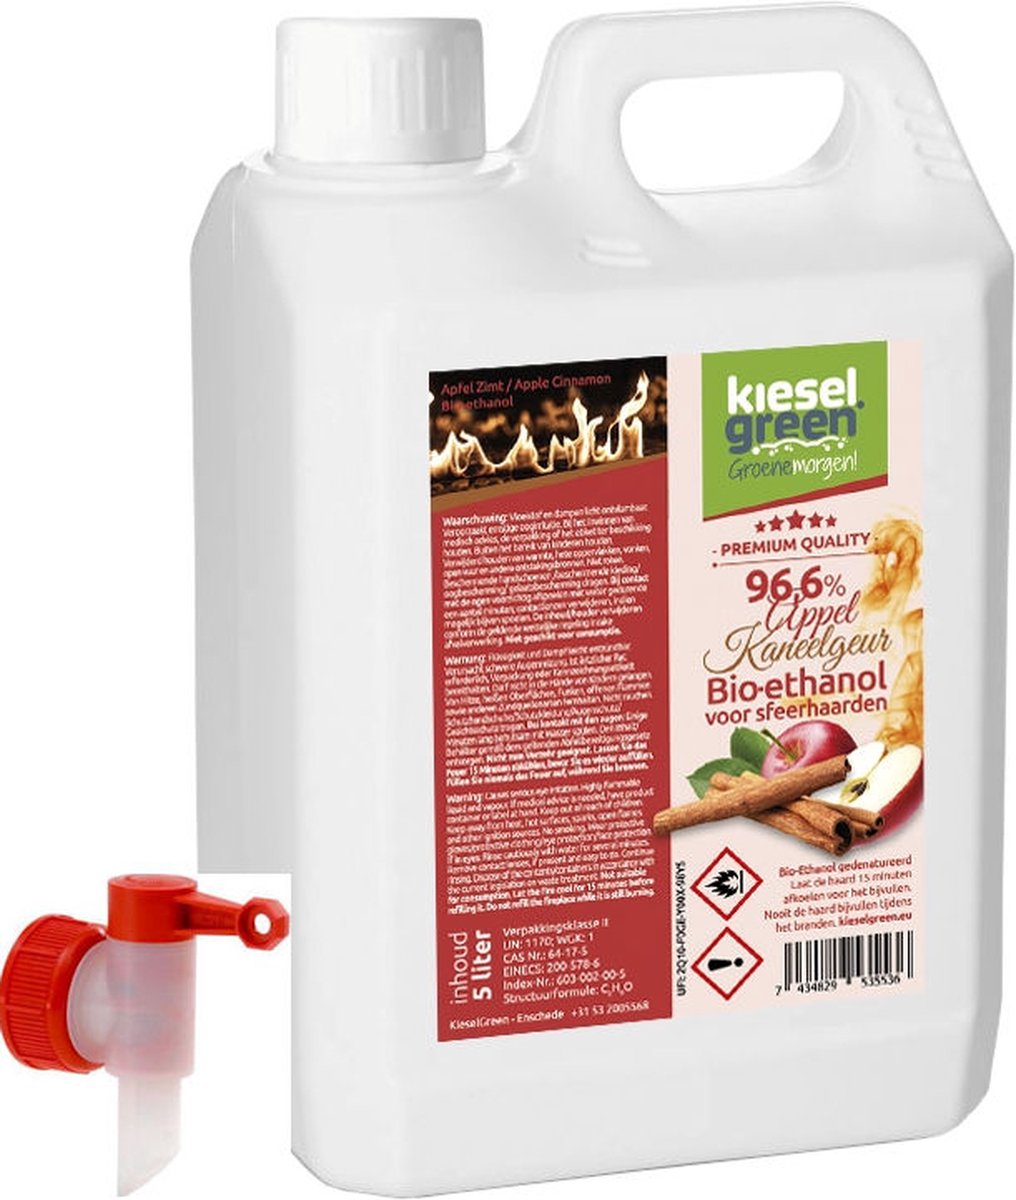 KieselGreen Bioethanol met kaneel/appelgeur - bio ethanol 96.6% - 5 liter biobrandstof met dopkraan voor sfeerhaarden